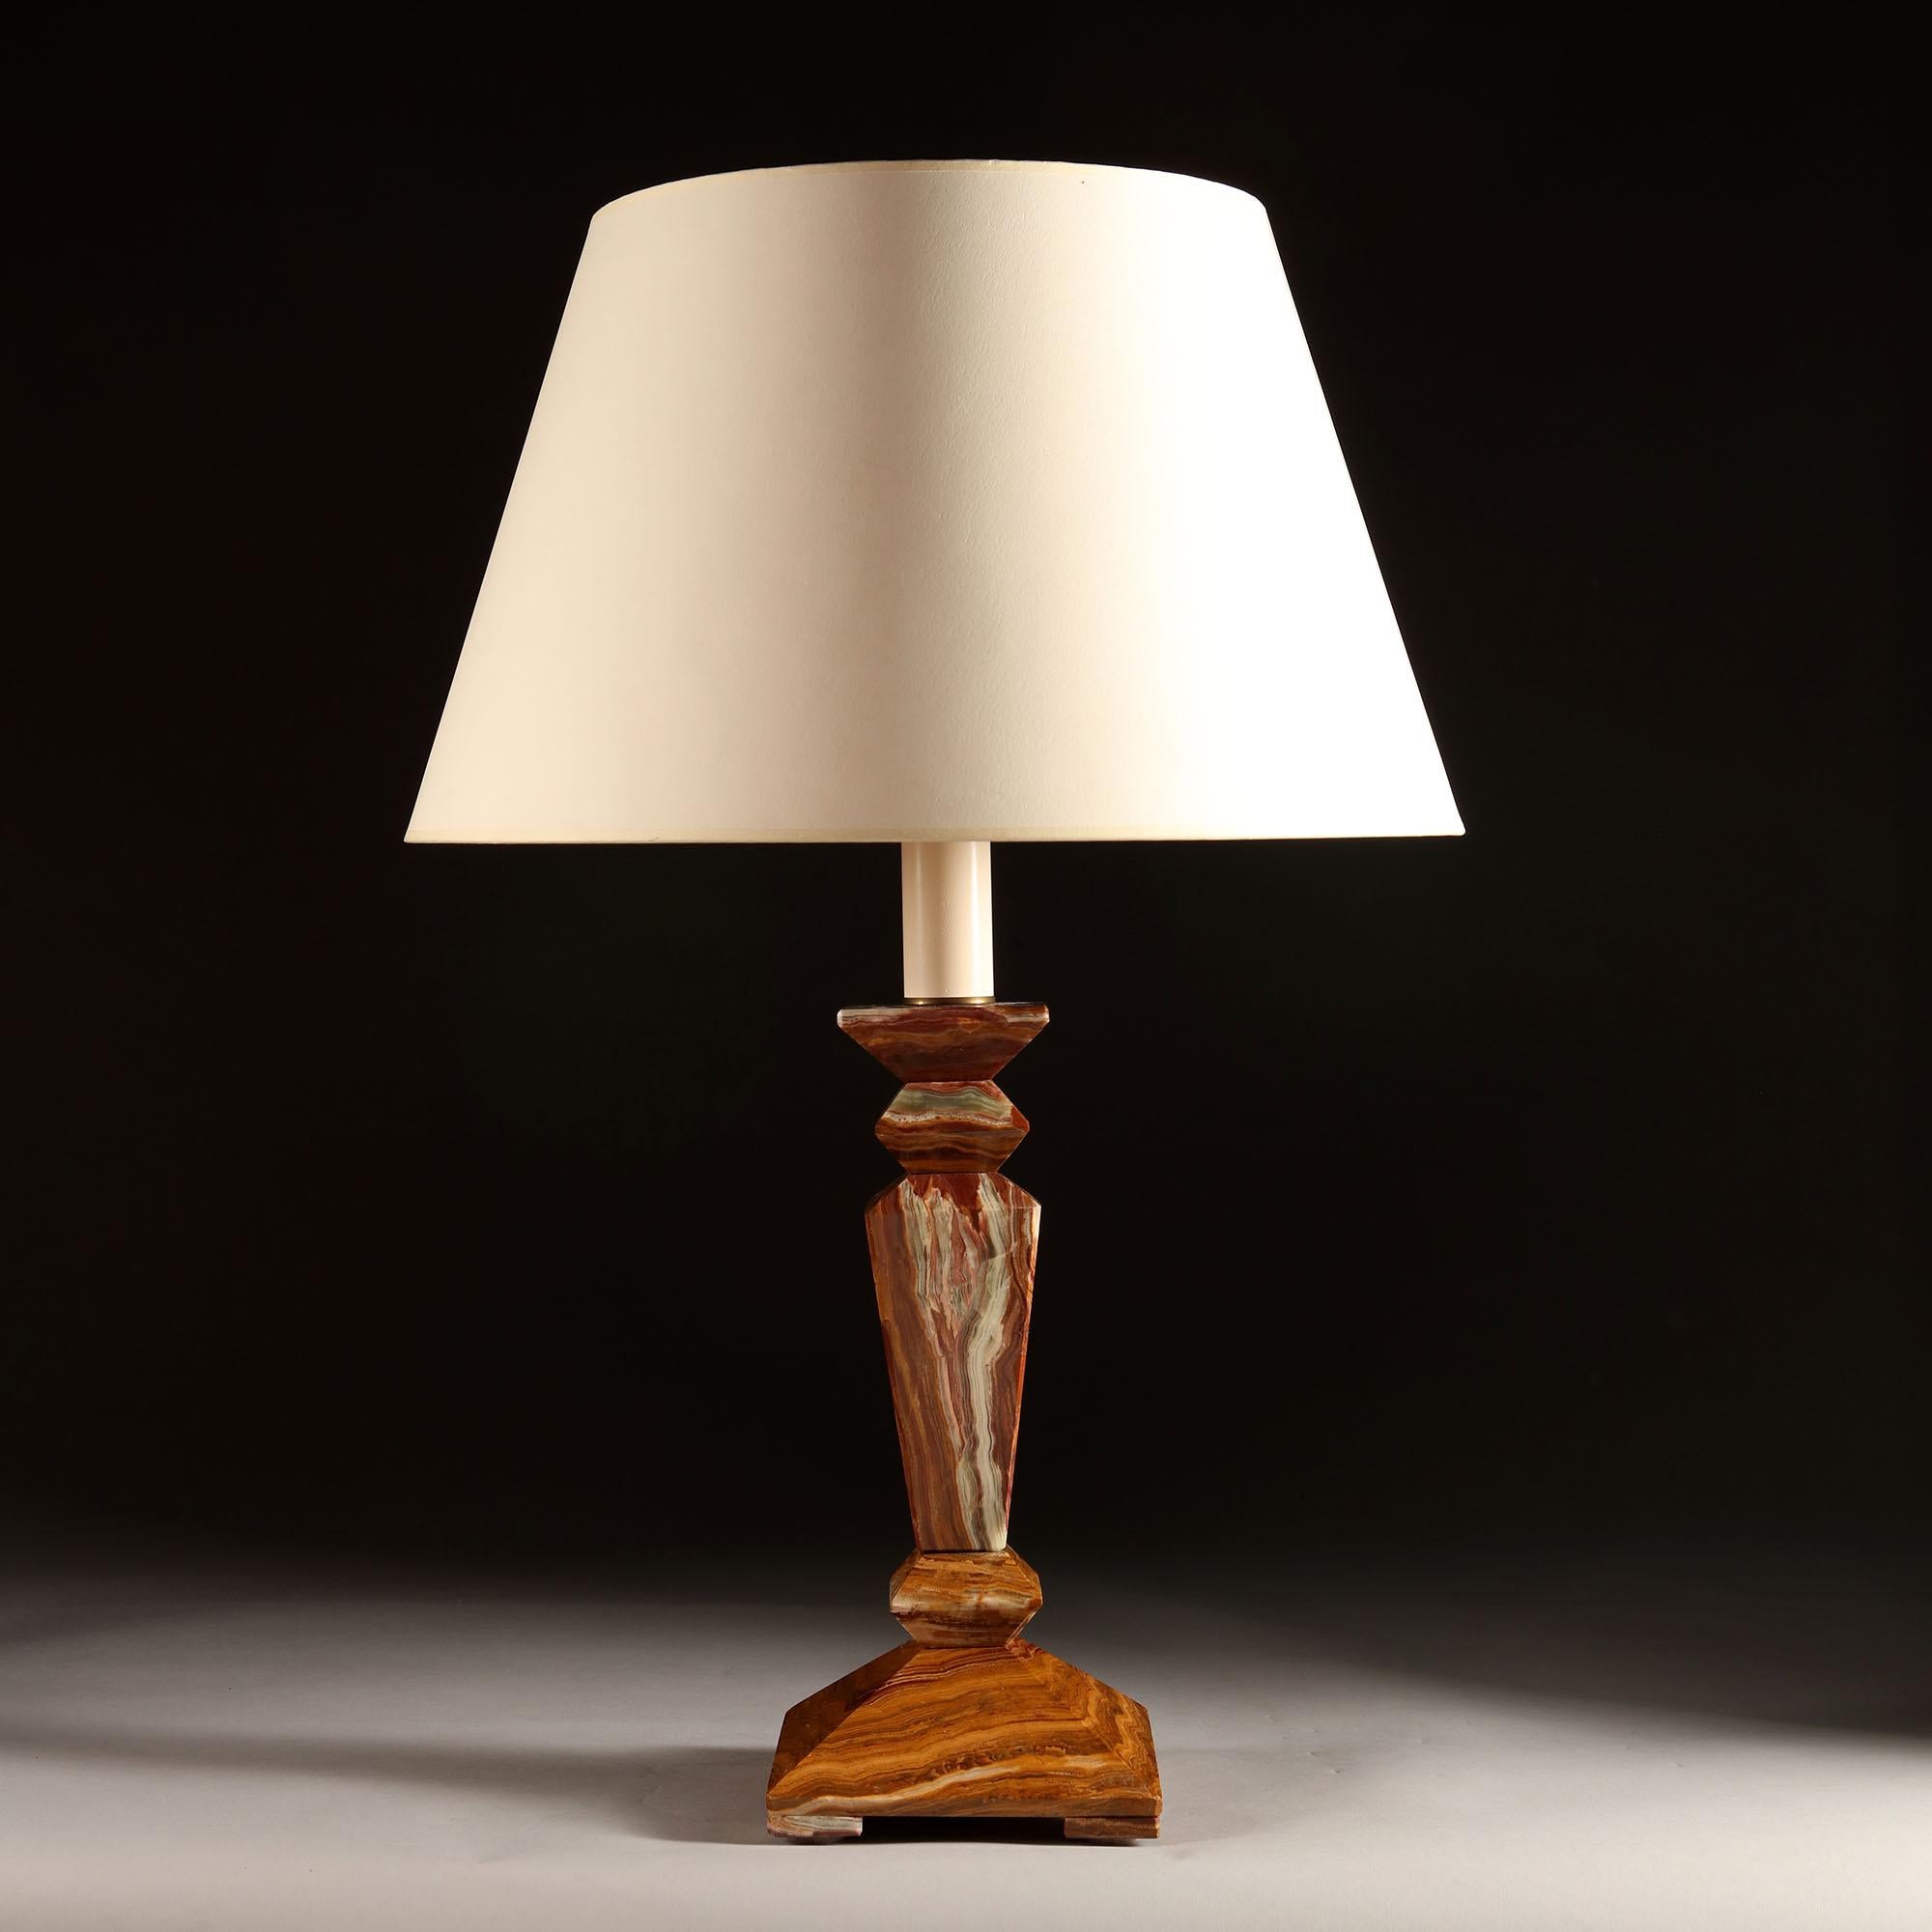 20th Century Unusual Art Deco Onyx Table Lamp with Geometric Form